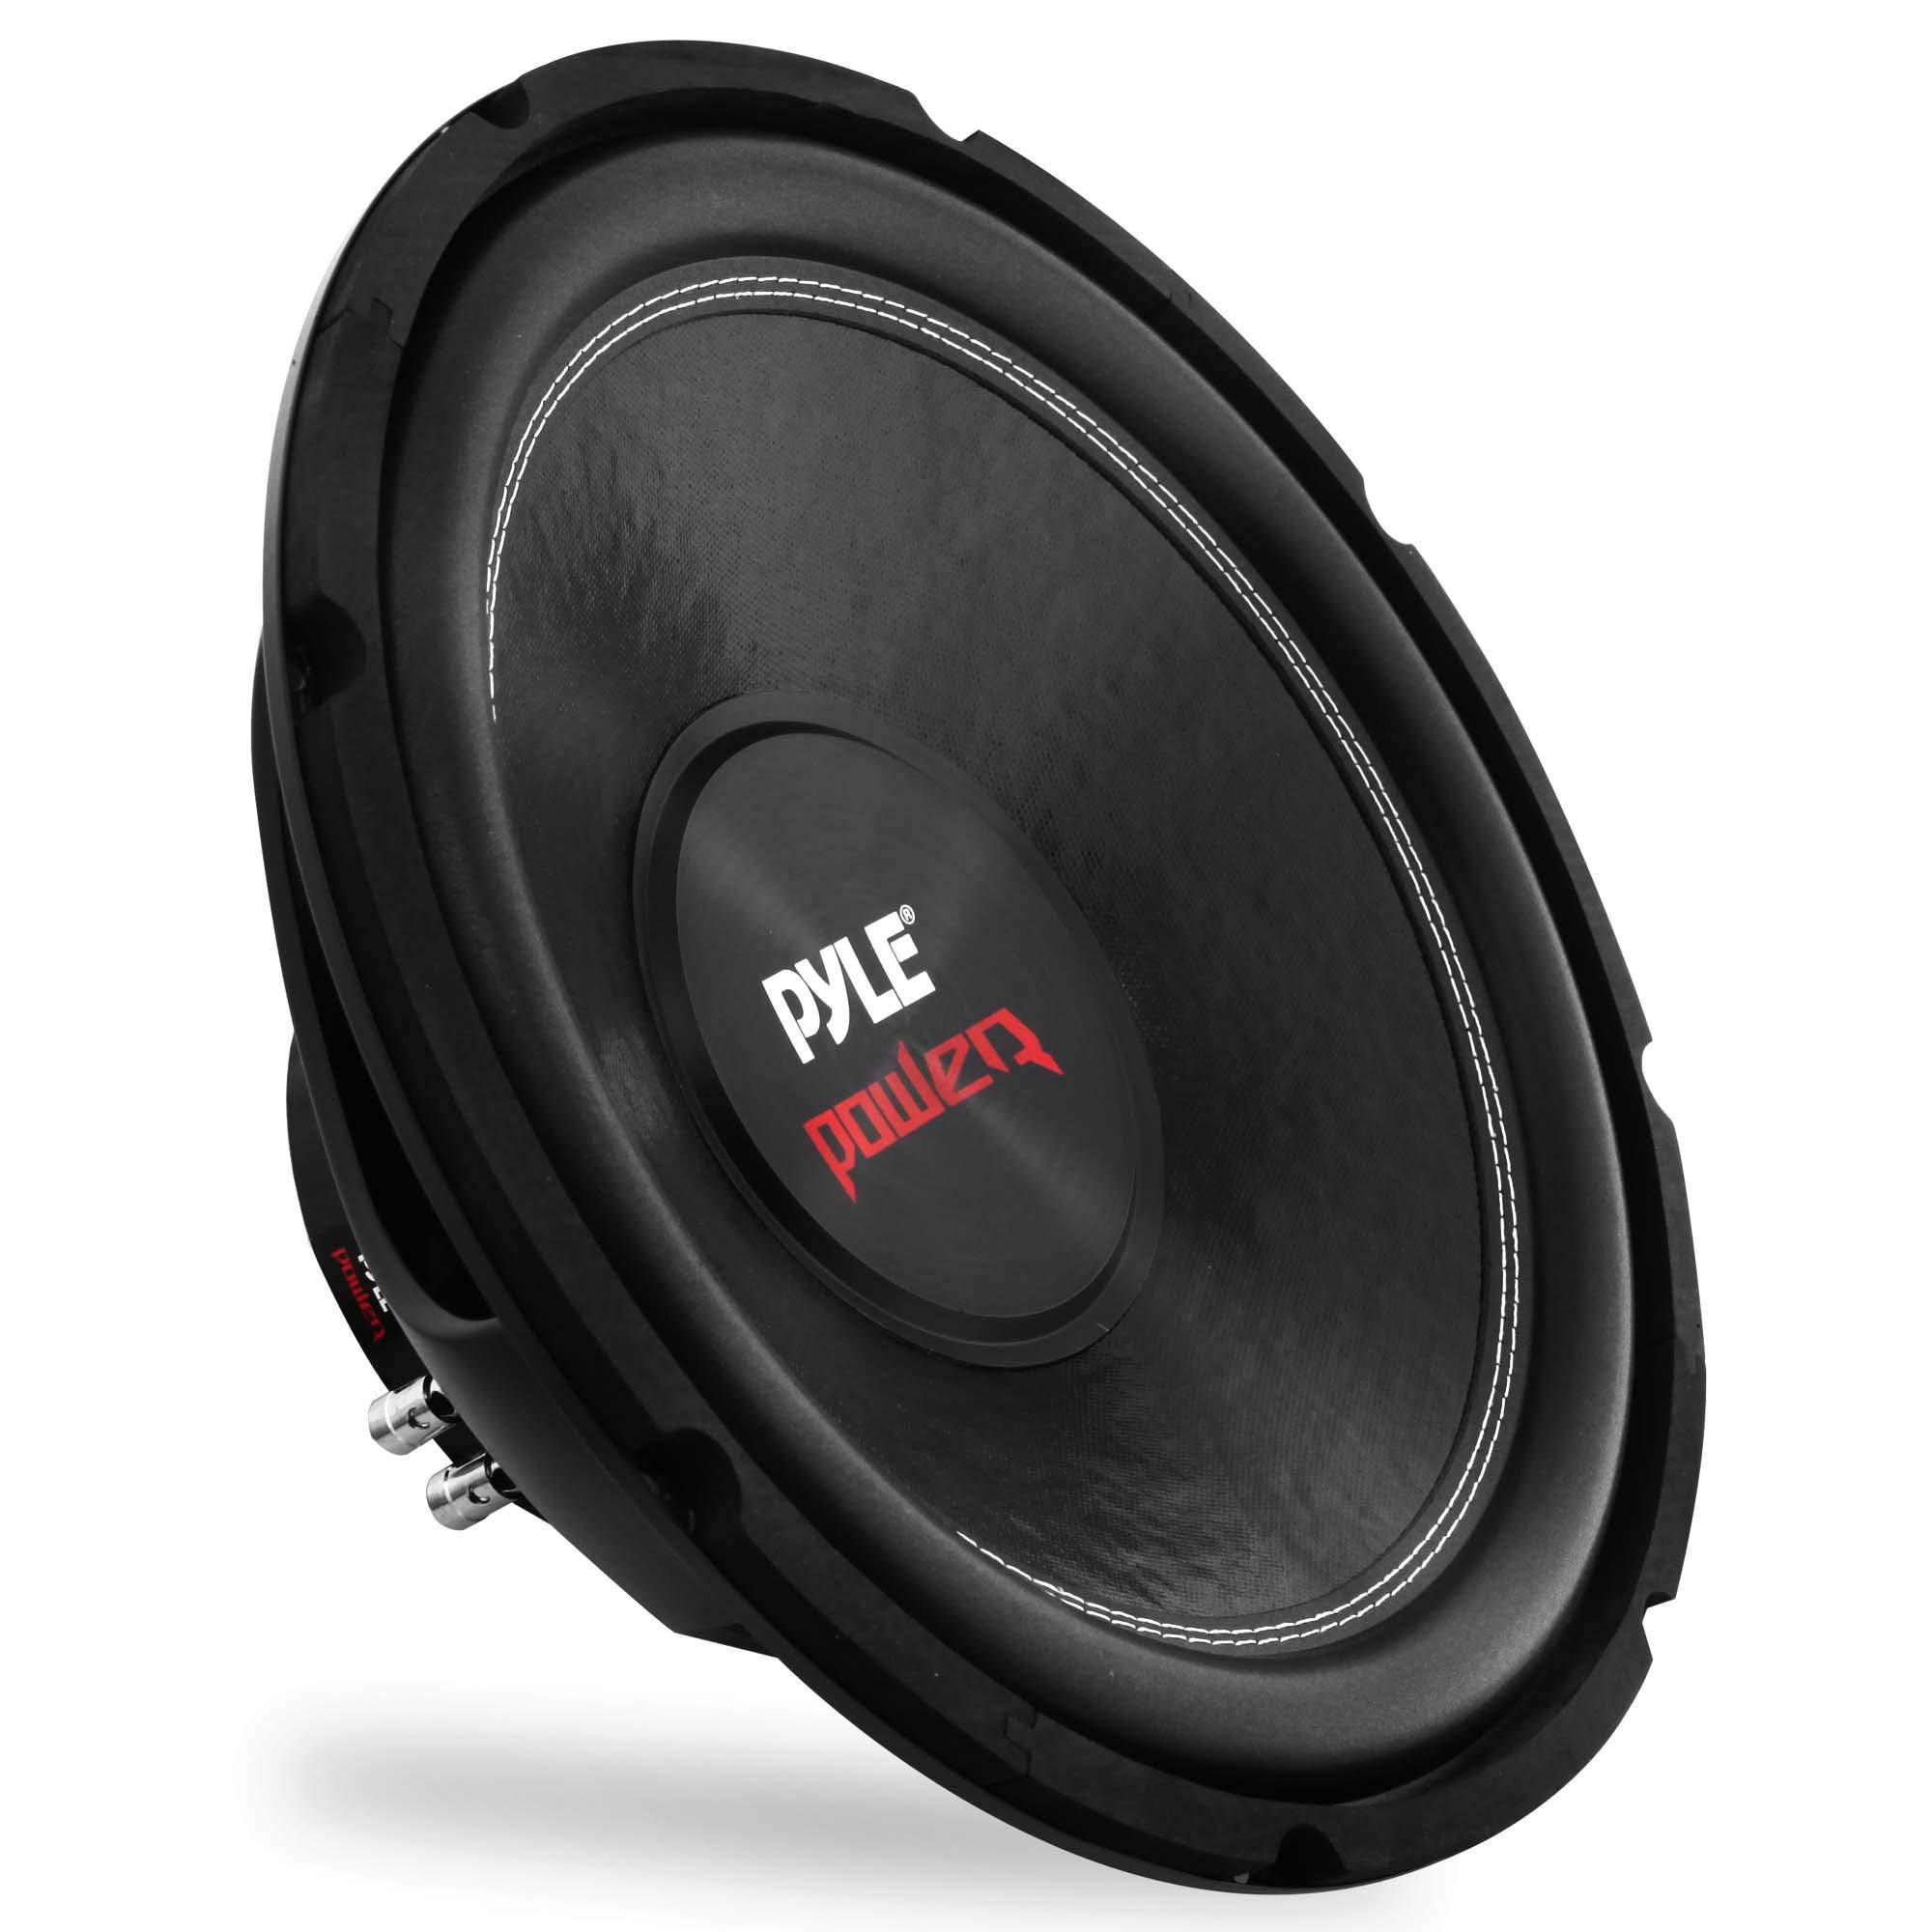 pyle 10" car audio speaker subwoofer - 1000 watt high power bass surround sound stereo subwoofer speaker system - non press p